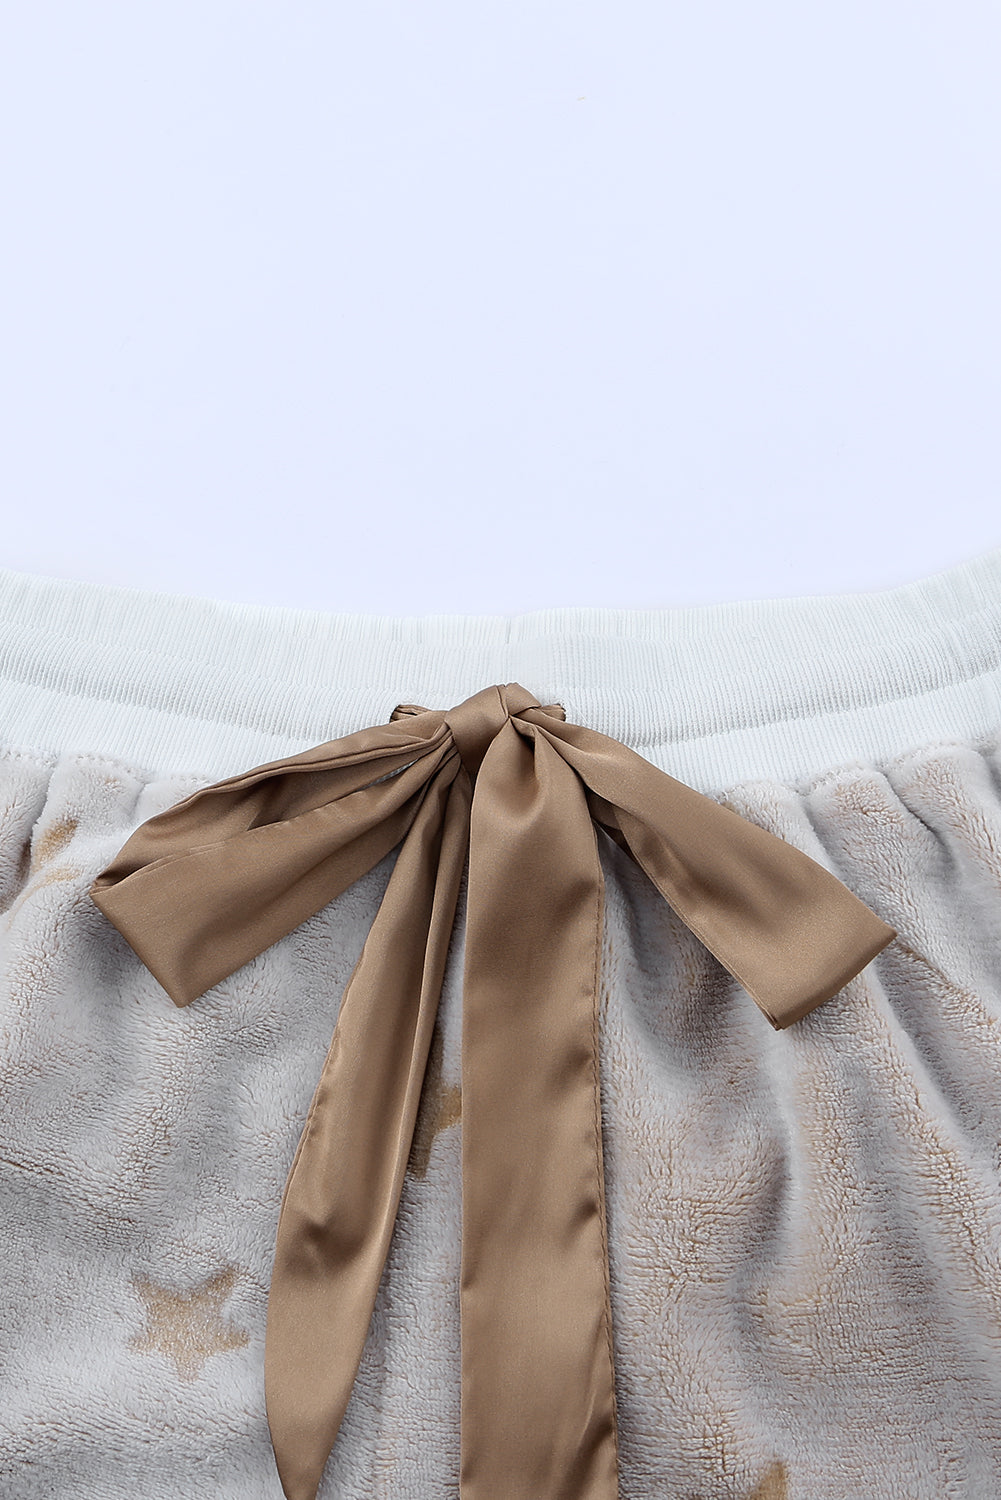 White Star Print Long Sleeve Top & Shorts Loungewear Set